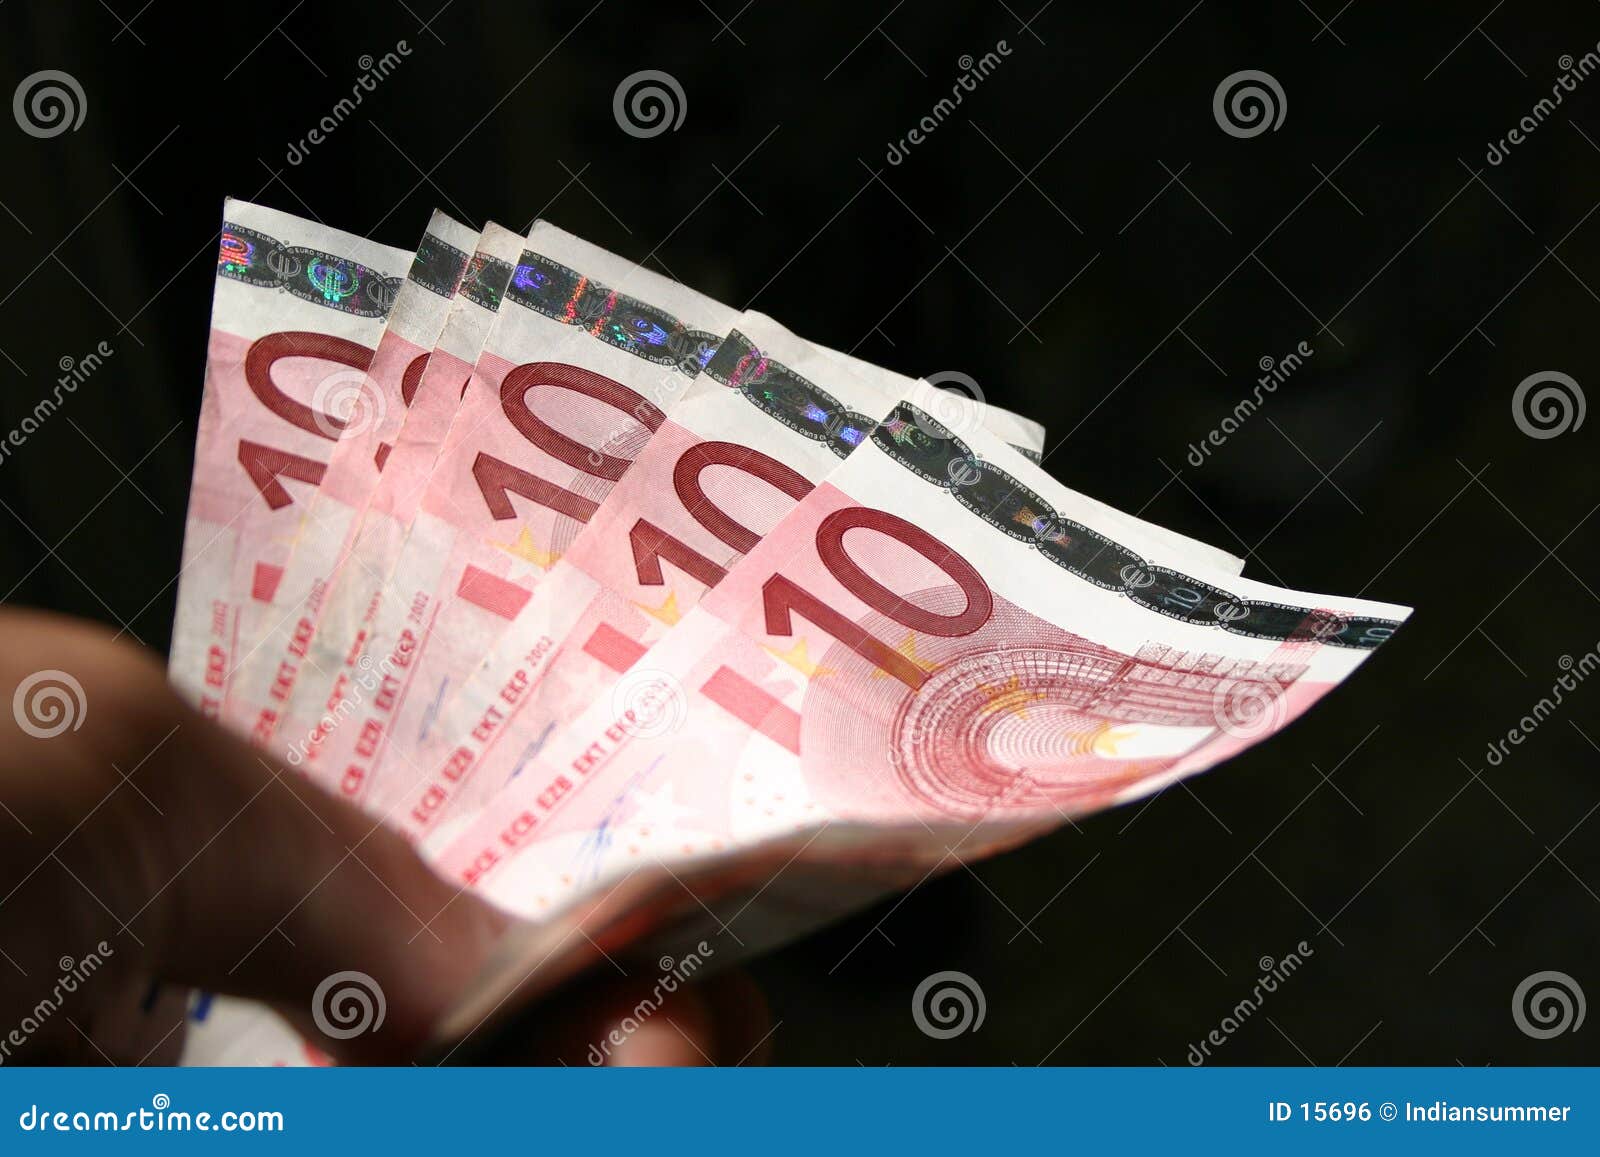 10 euros bills close-up